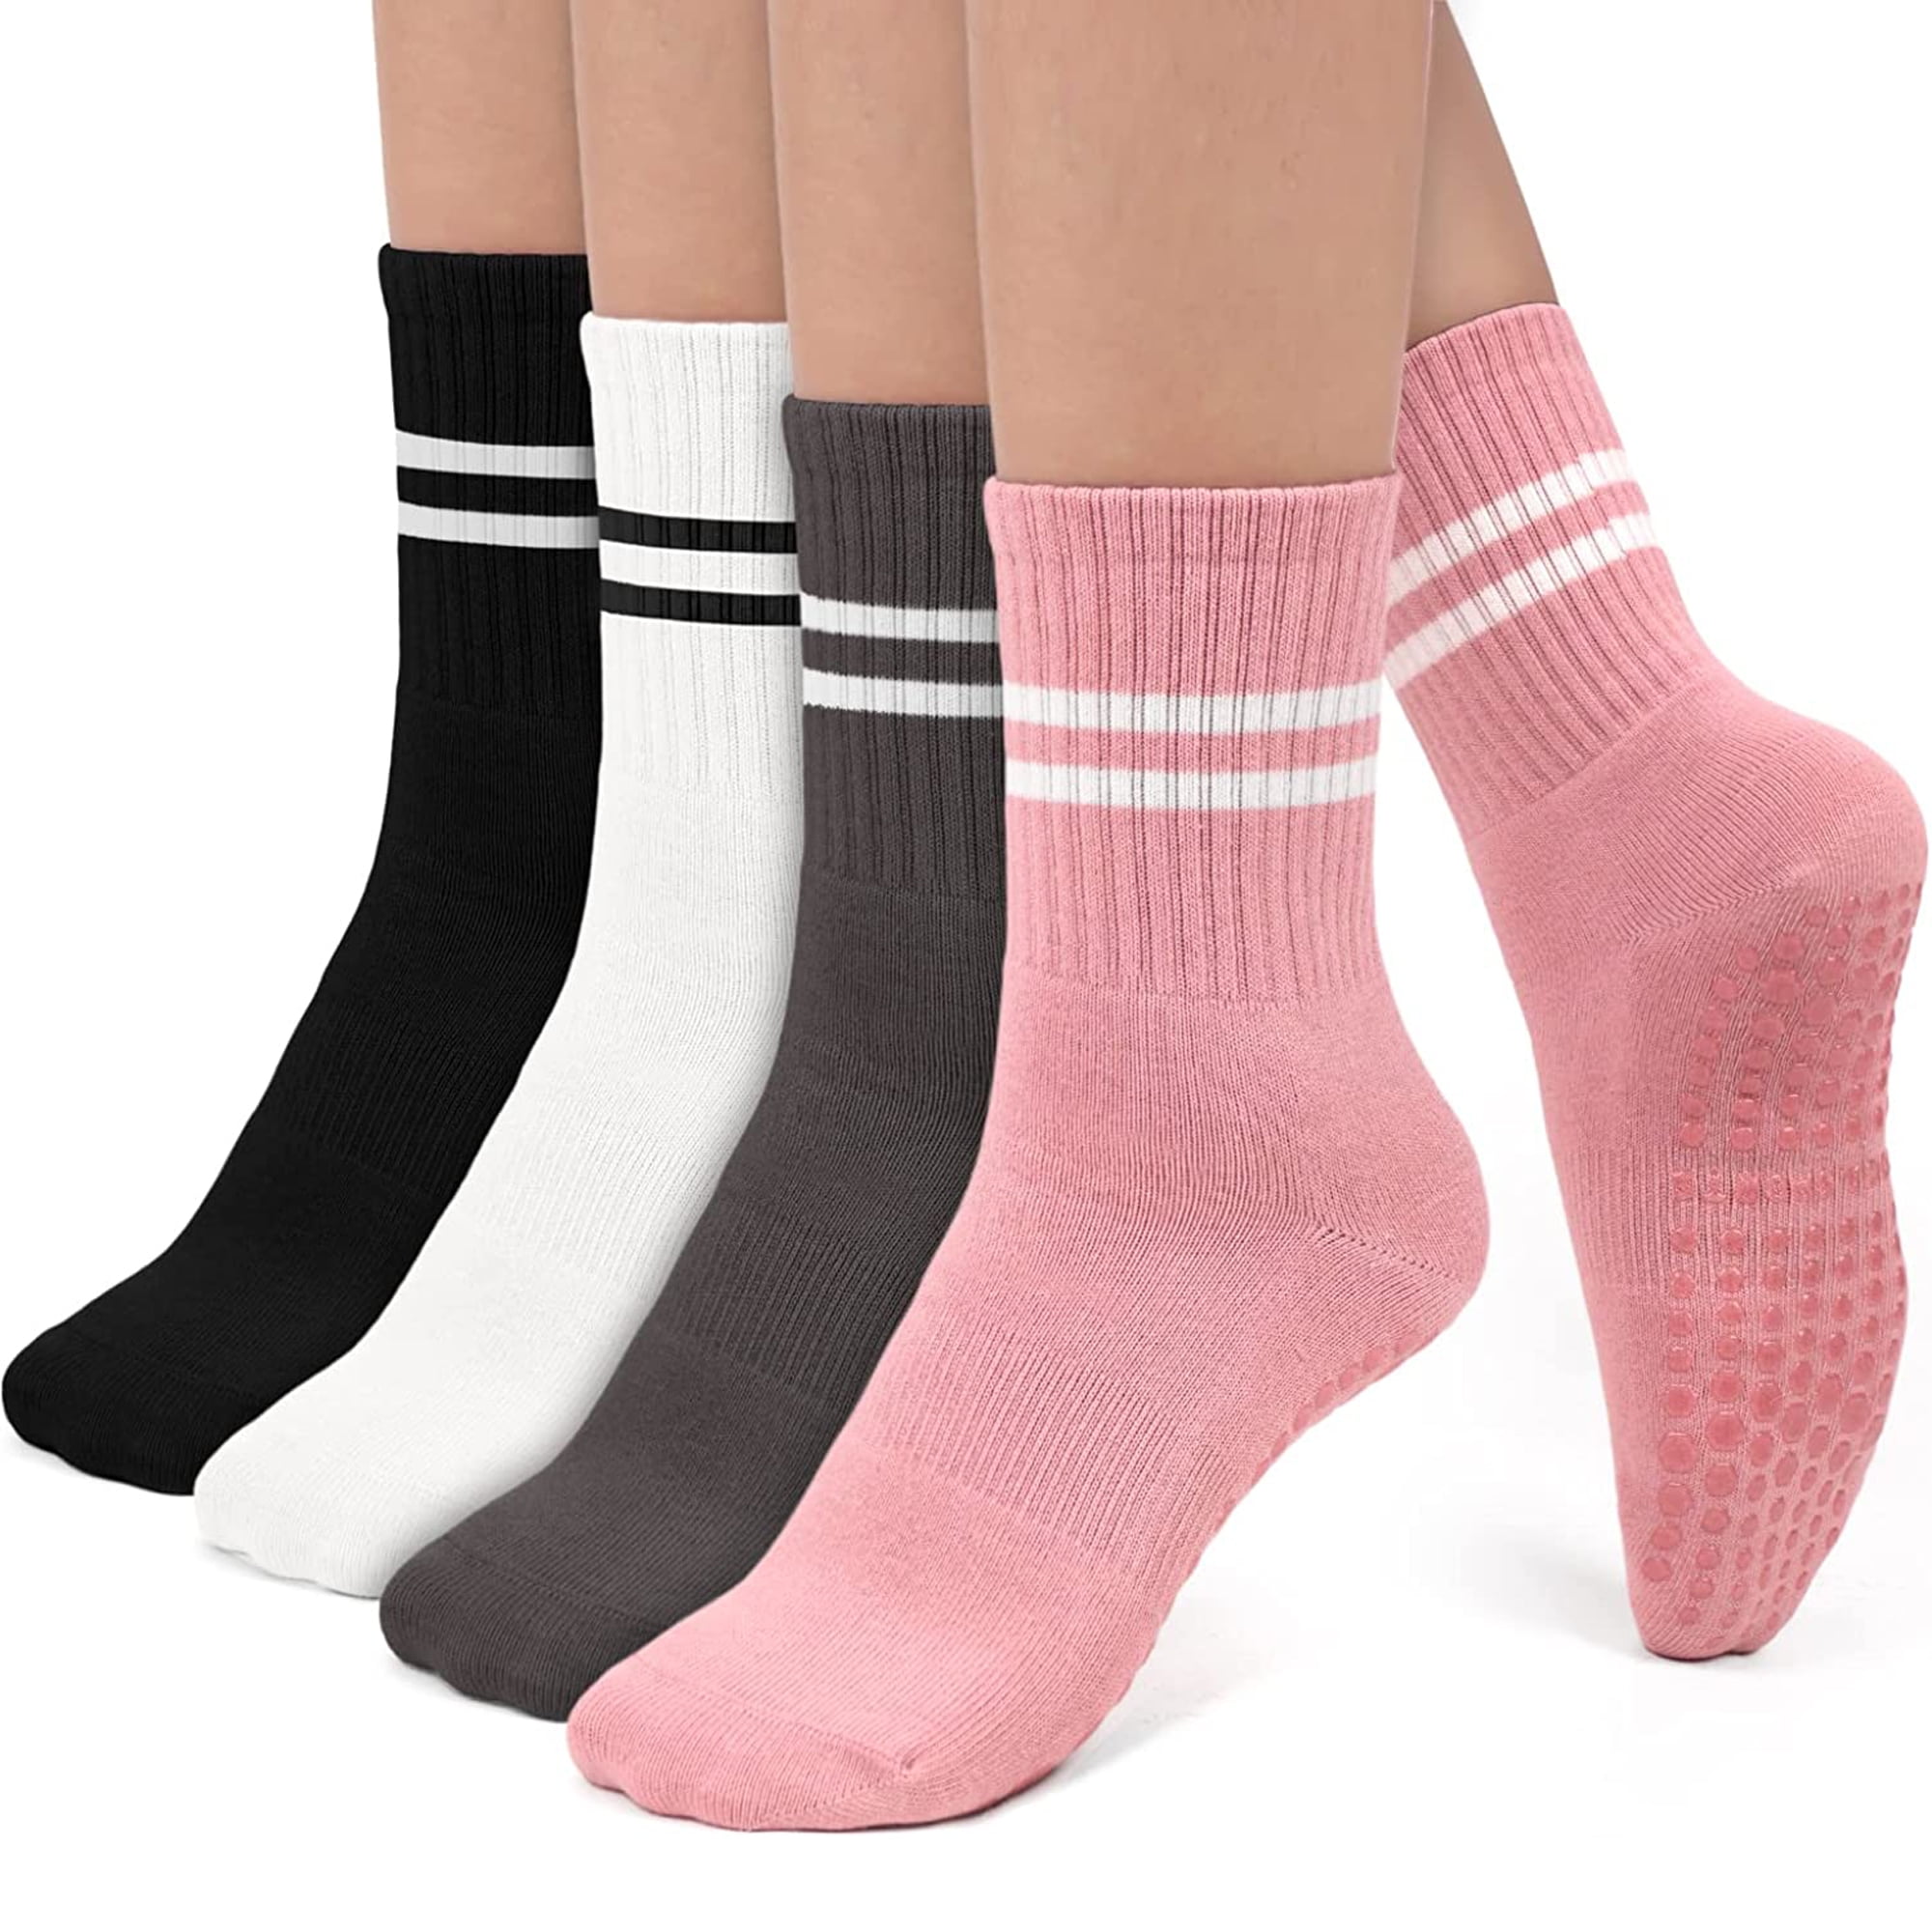 CaiDieNu Yoga Socks for Women, Non Slip Full Toe Socks with Grips for Pilates  Barre Dance Ballet Hospital, 3 Pairs at  Women's Clothing store